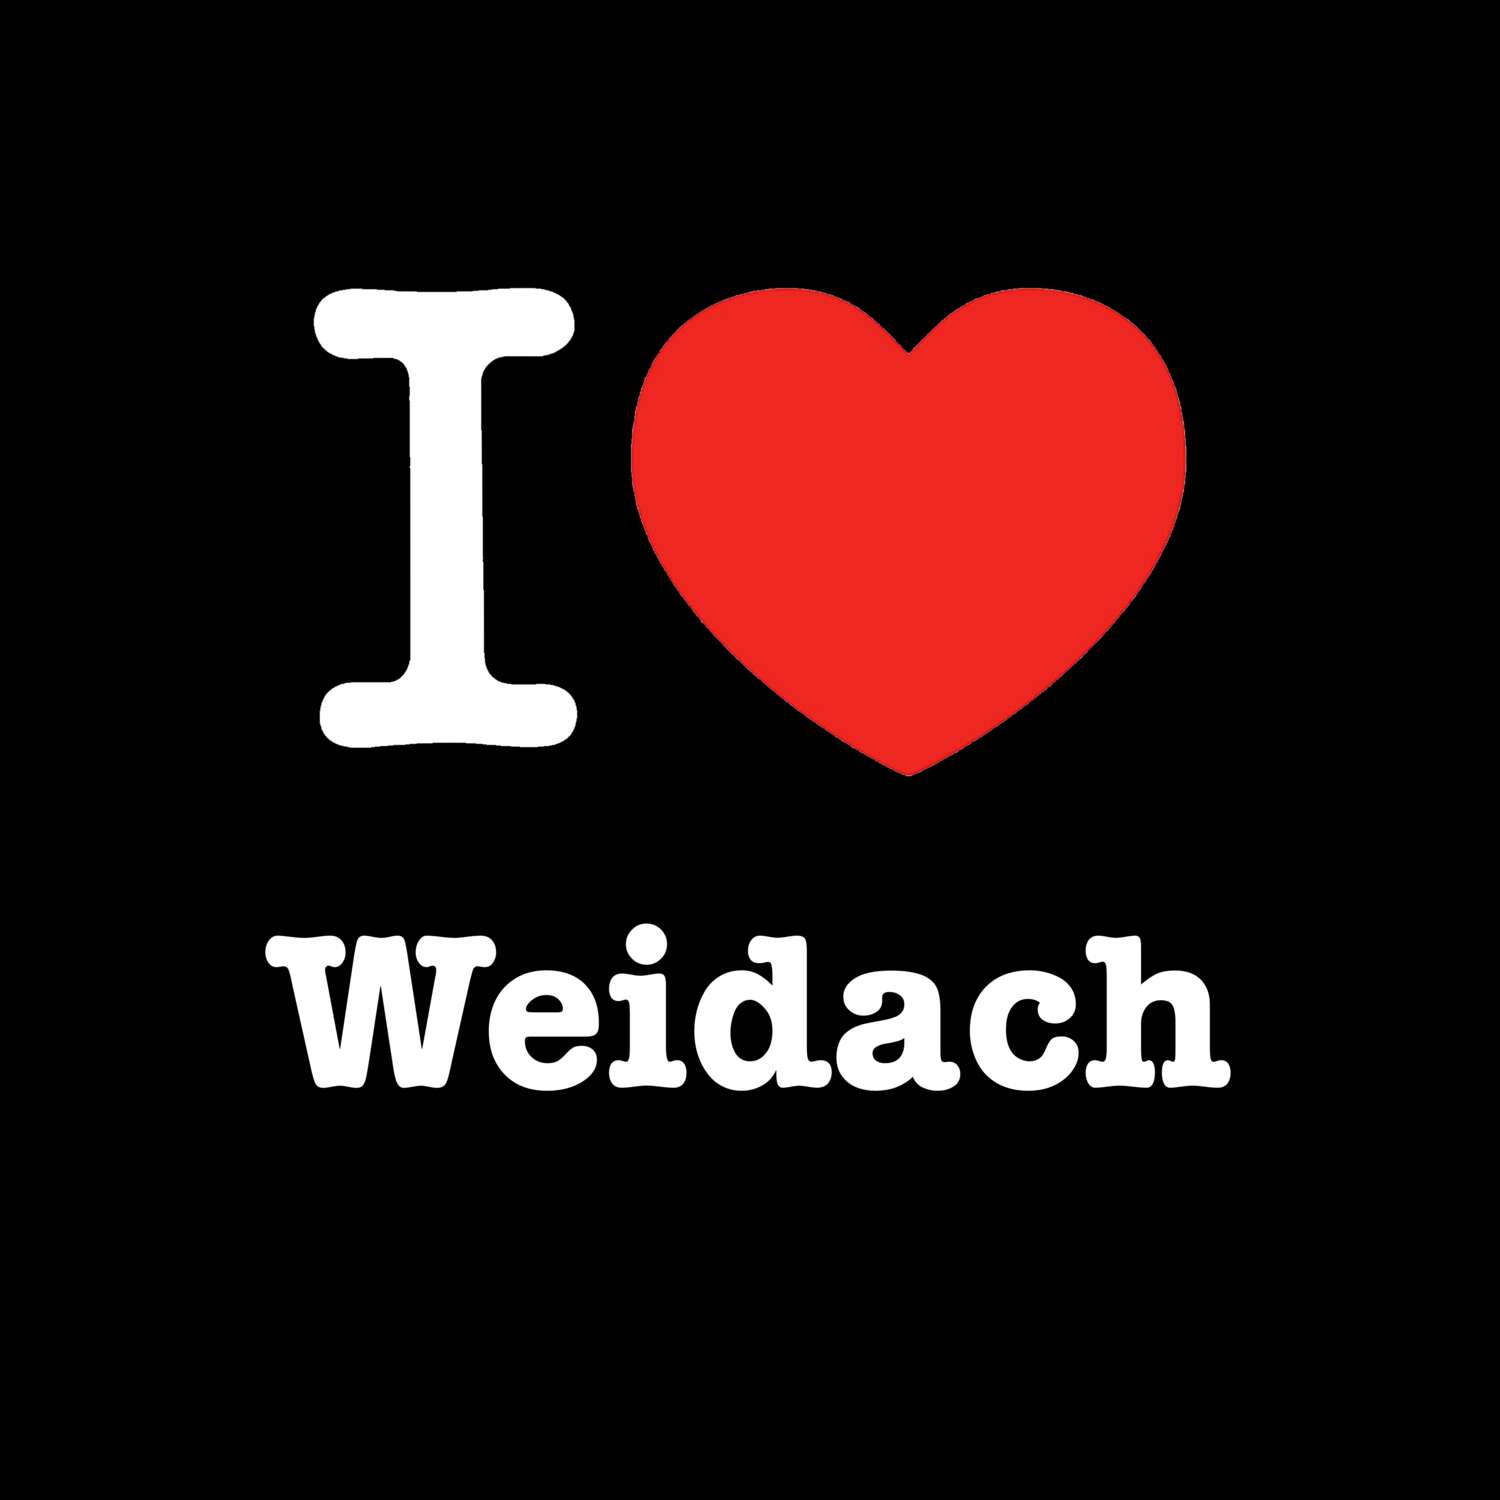 Weidach T-Shirt »I love«